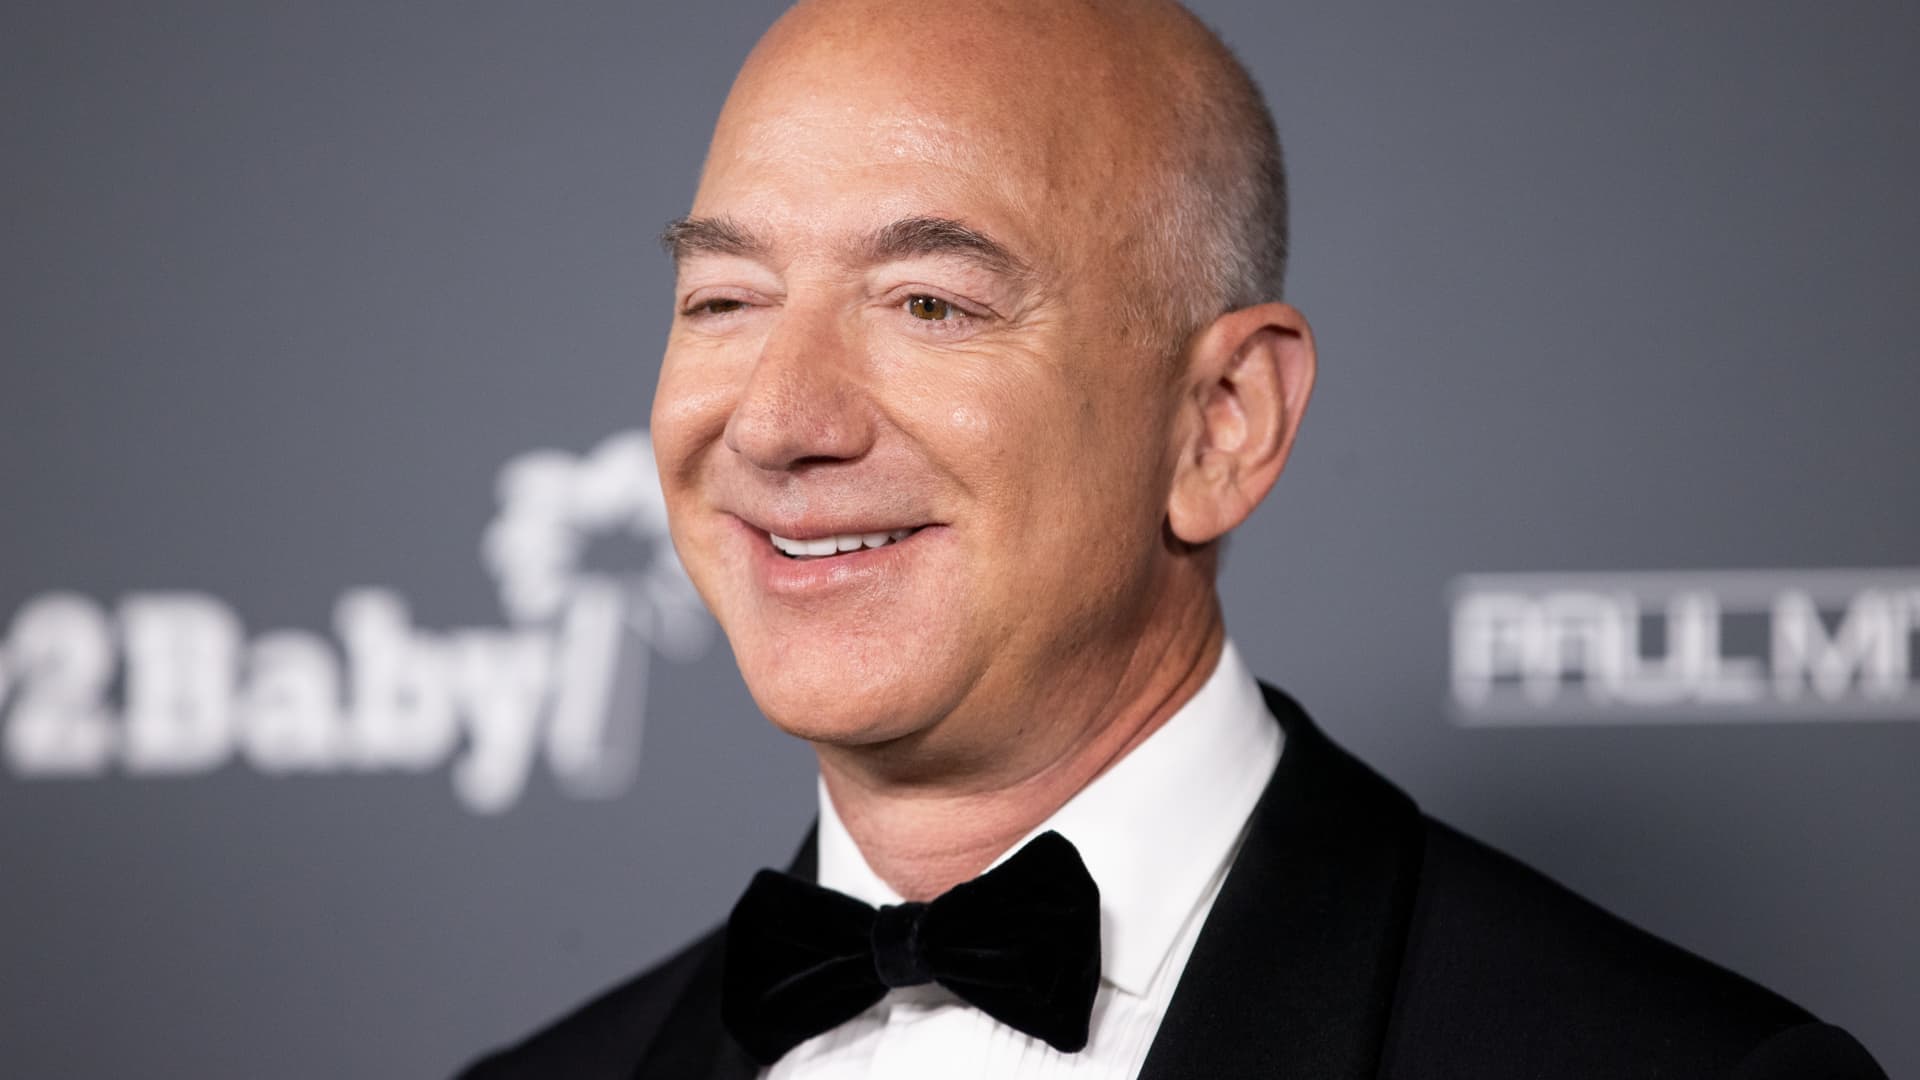 Bezos 'aggressive' again Tuesday selling more Amazon stock: Sources